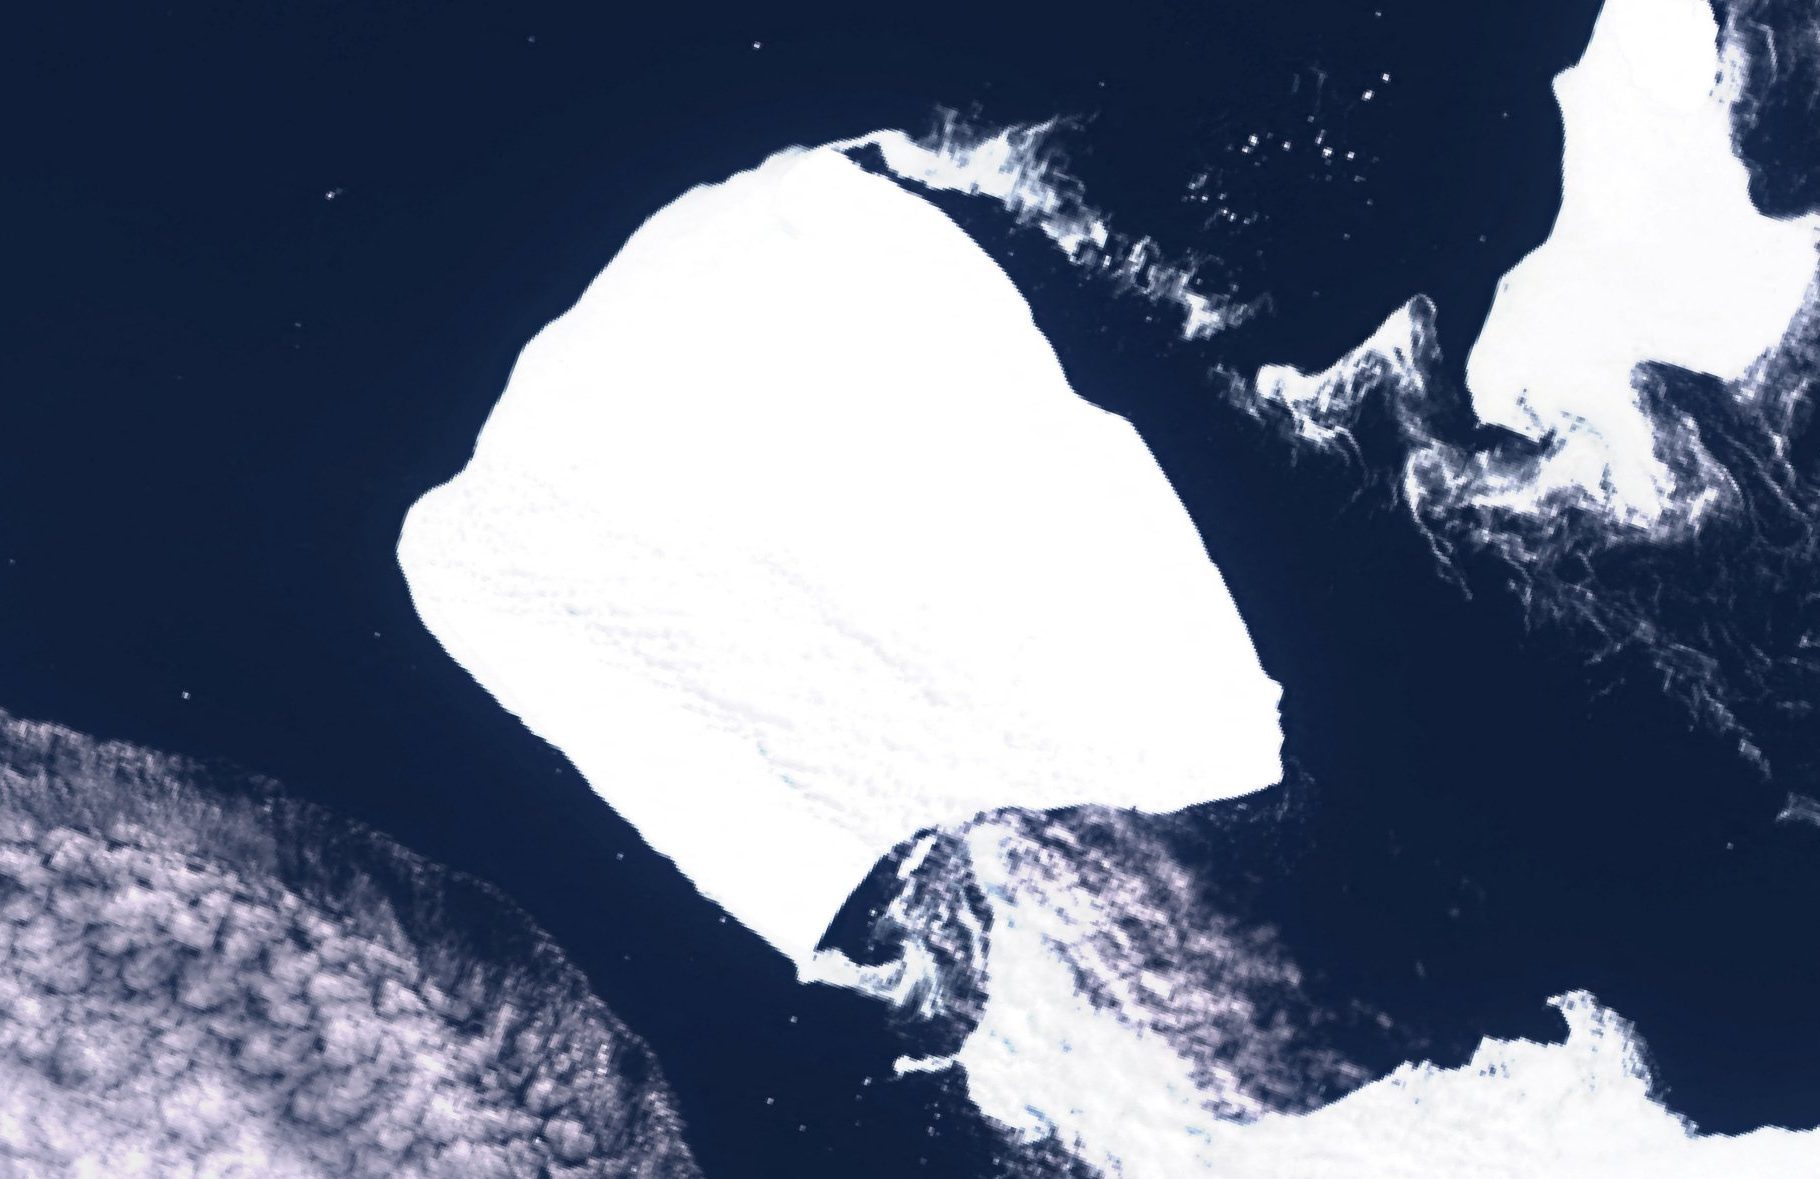 Самый большой Айсберг отколовшийся от Антарктиды. Самый большой Айсберг в мире. Самый большой Айсберг отколовшийся от Антарктиды 2023. Южный океан айсберги. Большой берг